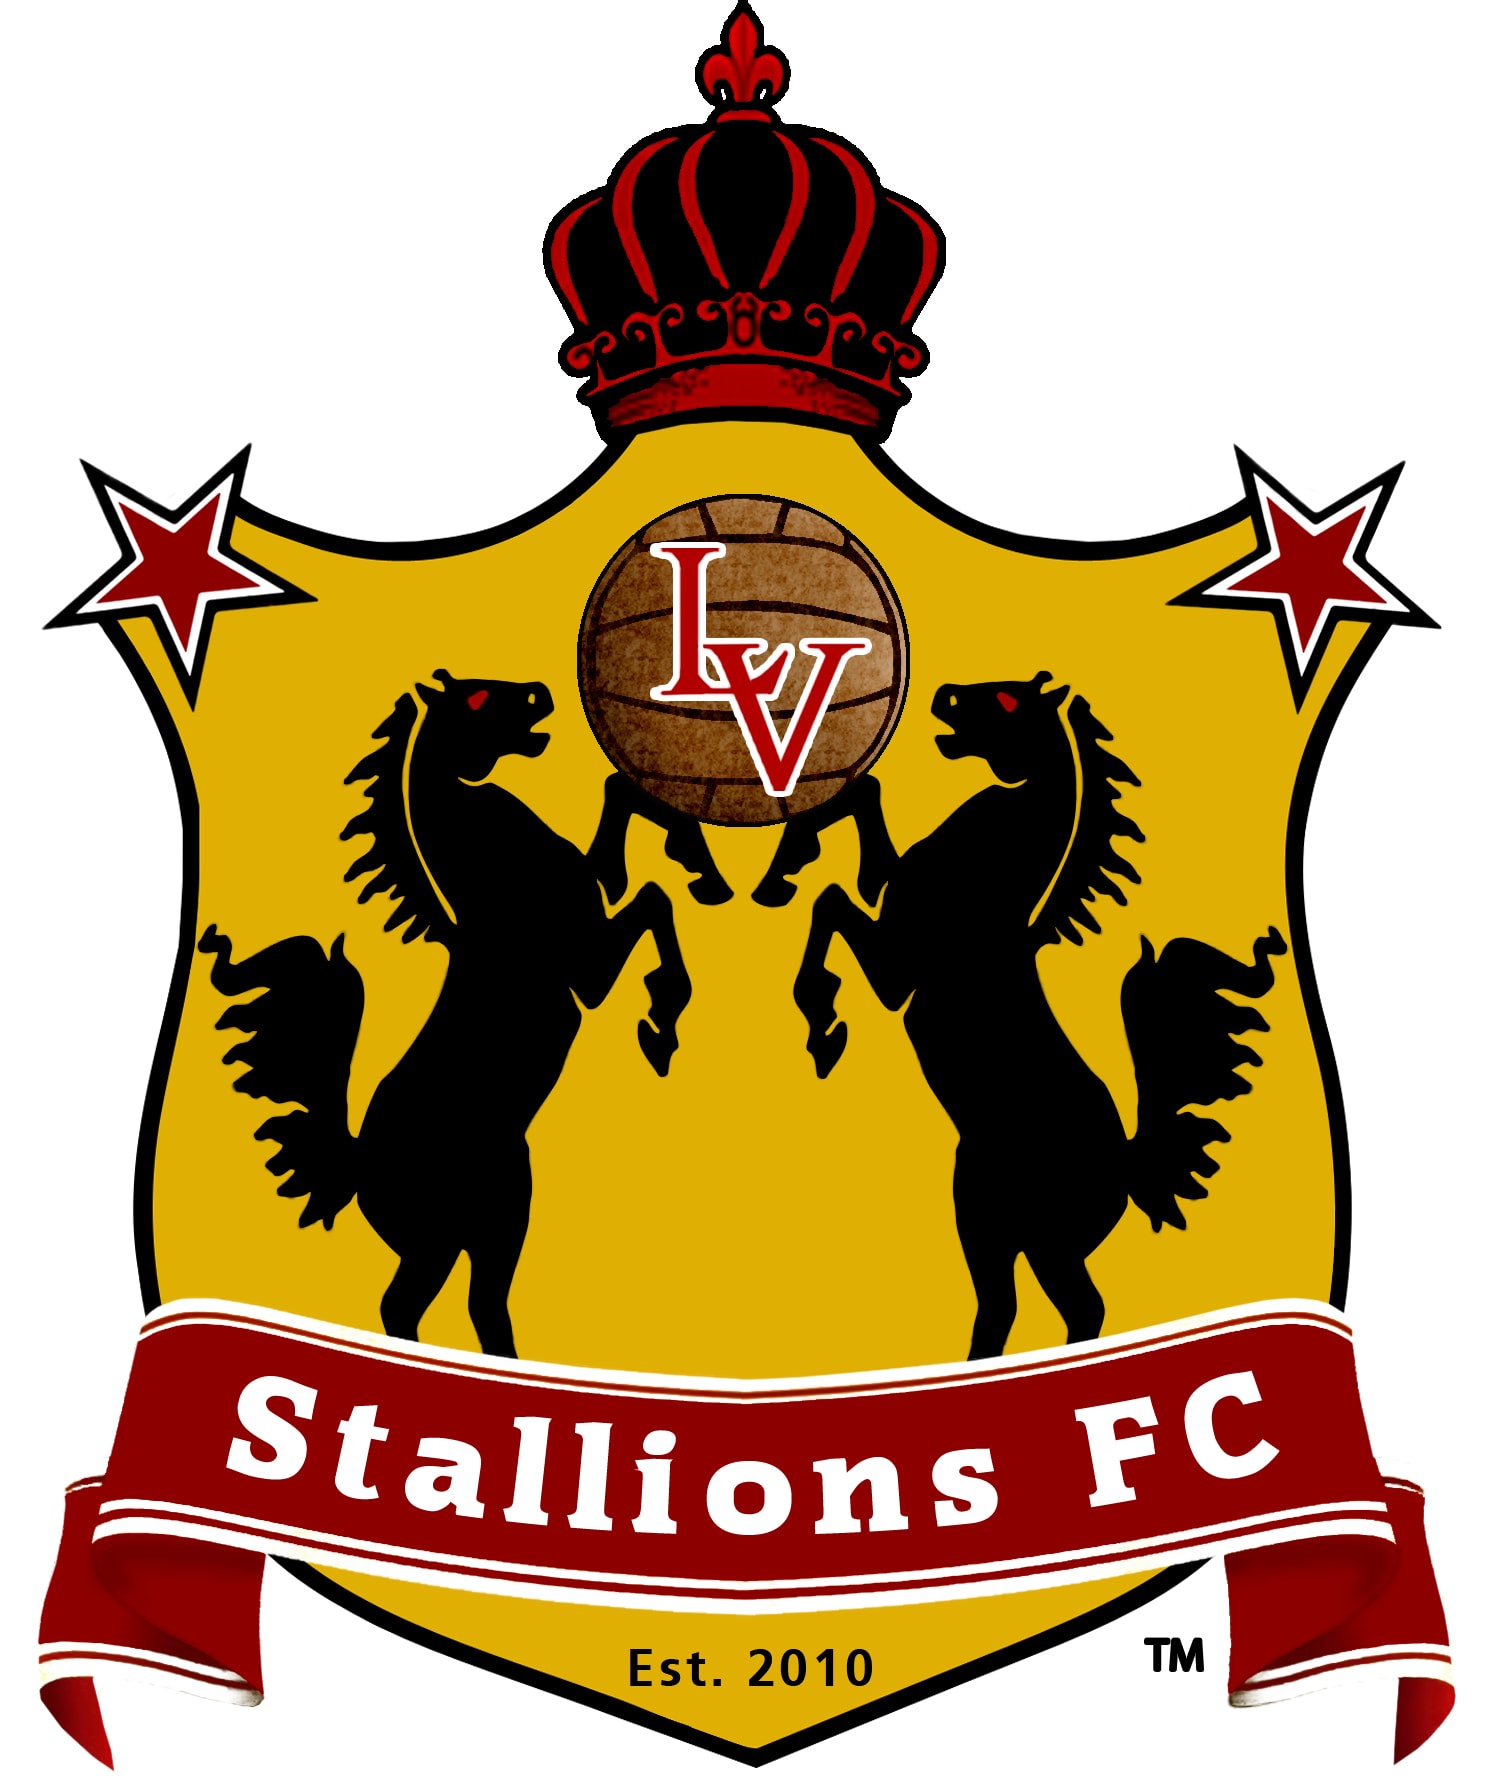 LV Stallions FC